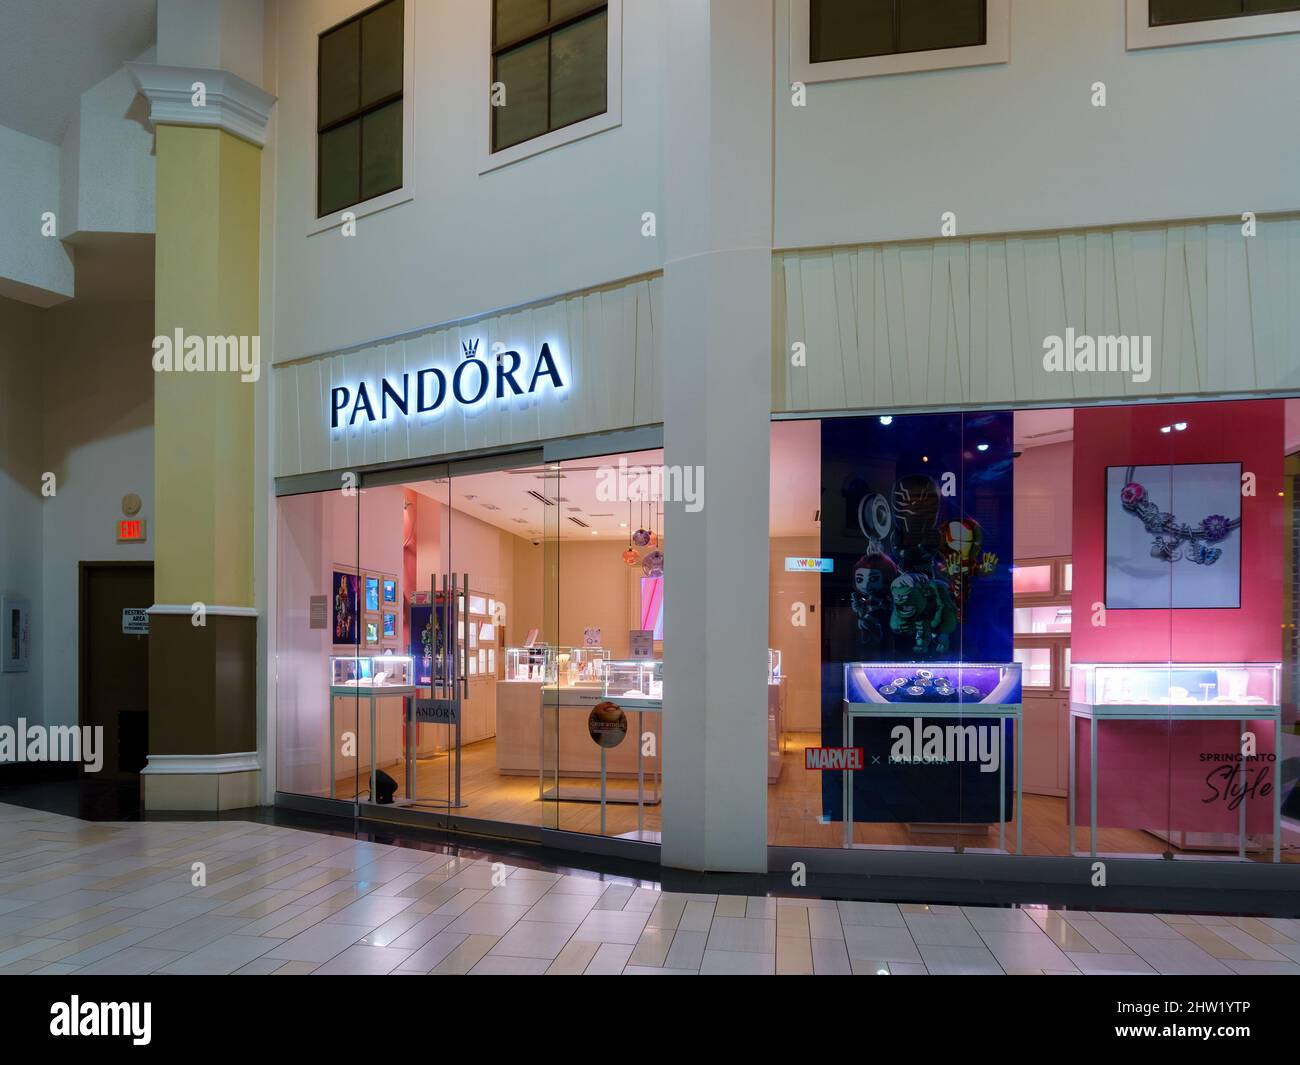 New Hartford, New York - Mar 1, 2022: A Side View of PANDORA Storefront inside Sangertown Mall. Pandora is an International Jewelry Company that Opera Stock Photo